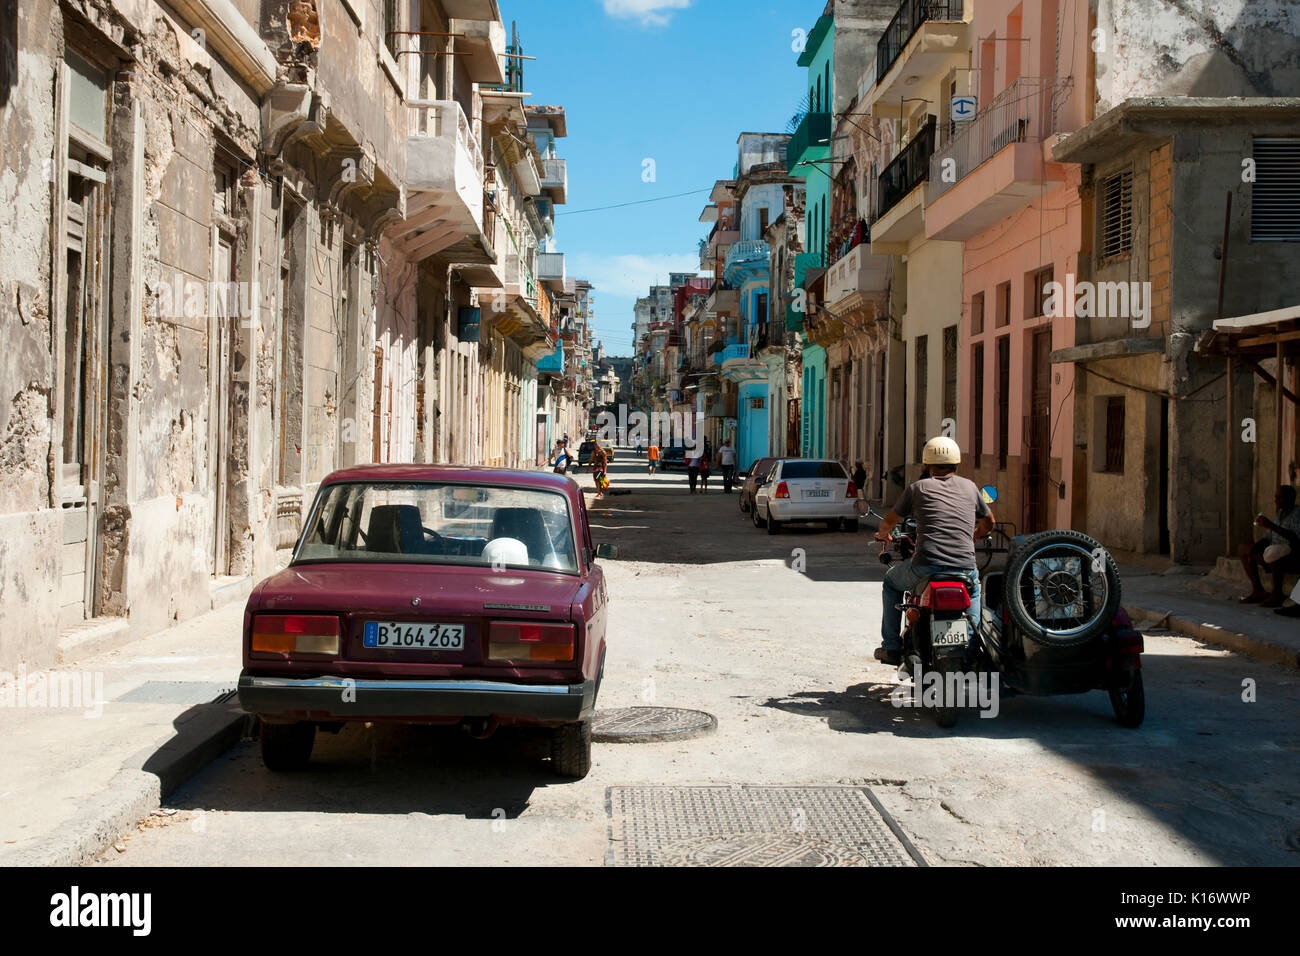 HAVANA, CUBA - June 7, 2015: Narrow residential & commercial street in the capital communist nation Stock Photo